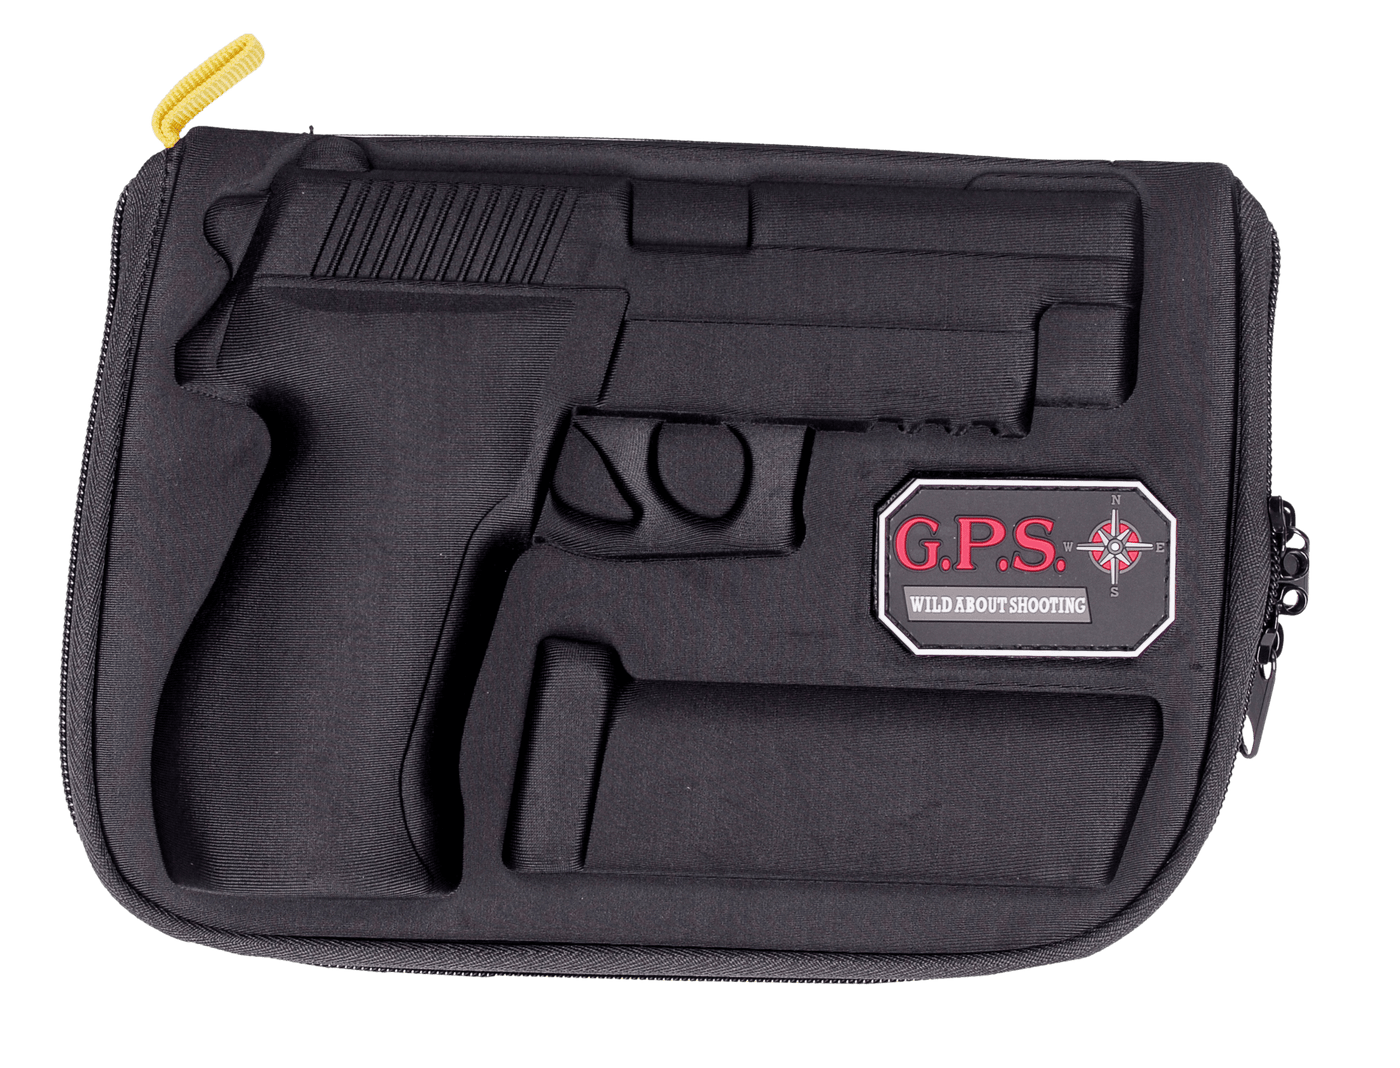 GPS Gps Molded Case Sig P226/p938 Black Soft Gun Cases